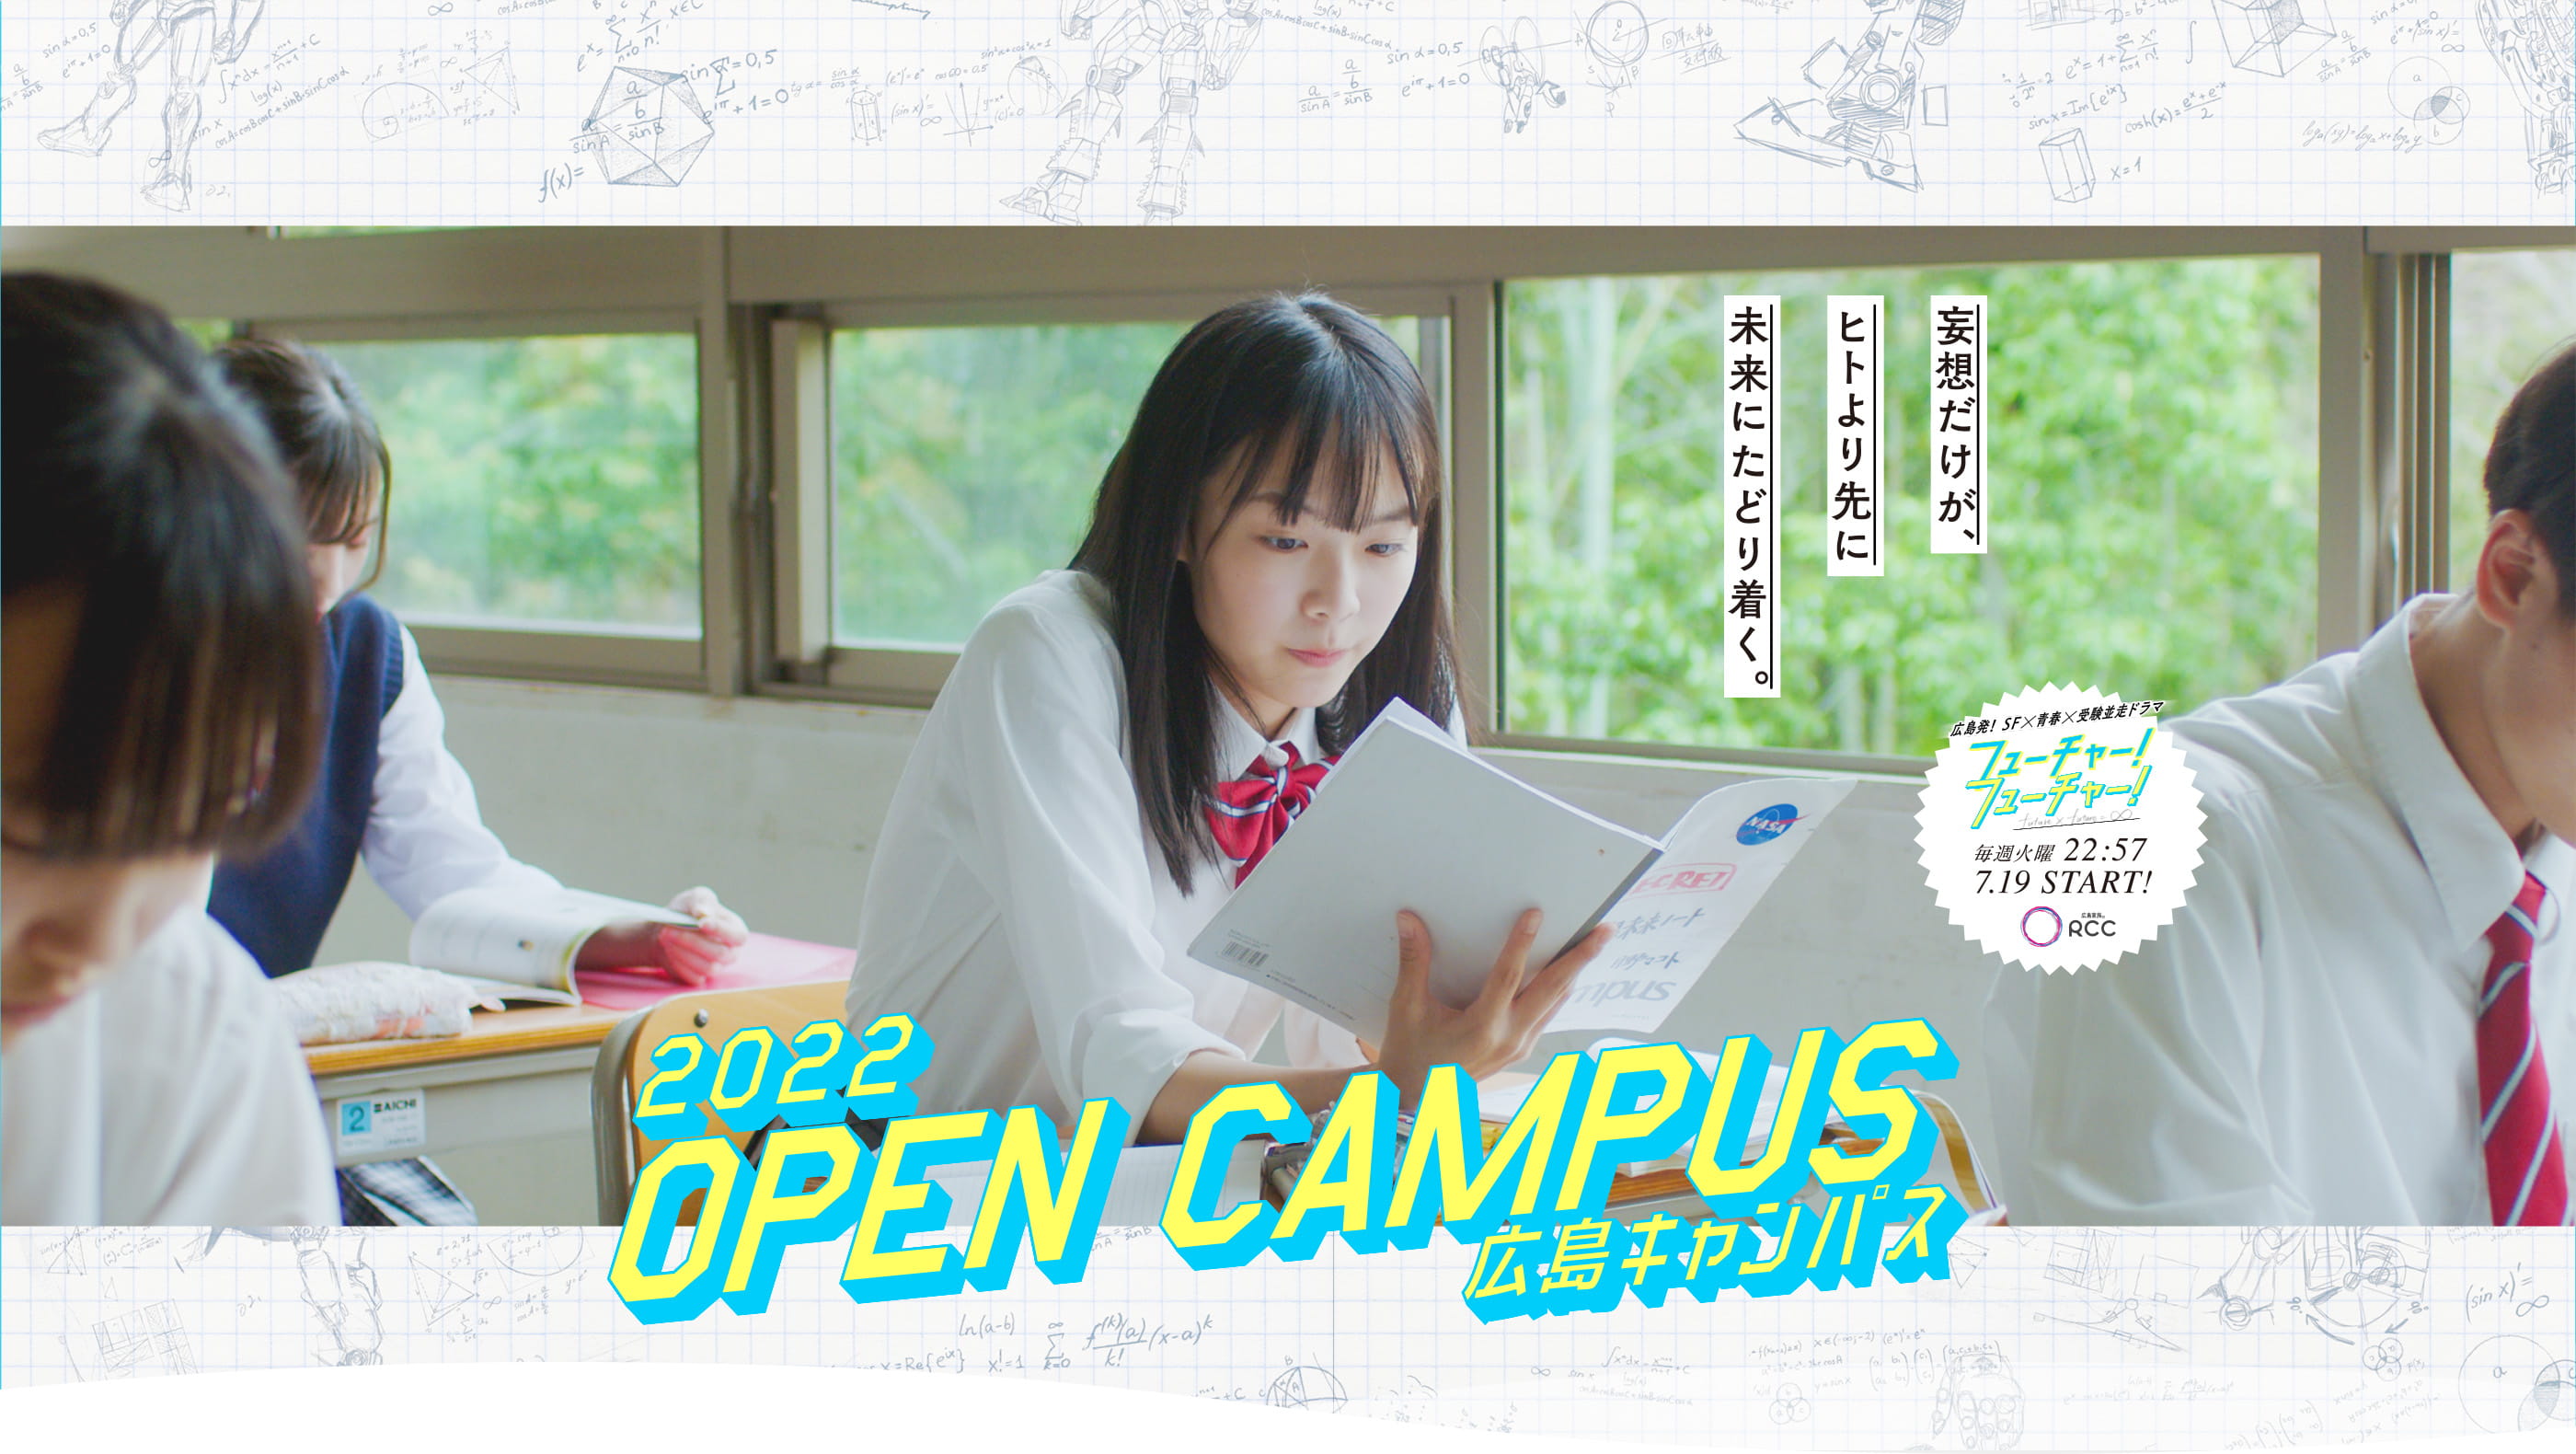 2022 OPEN CAMPUS 広島キャンパス